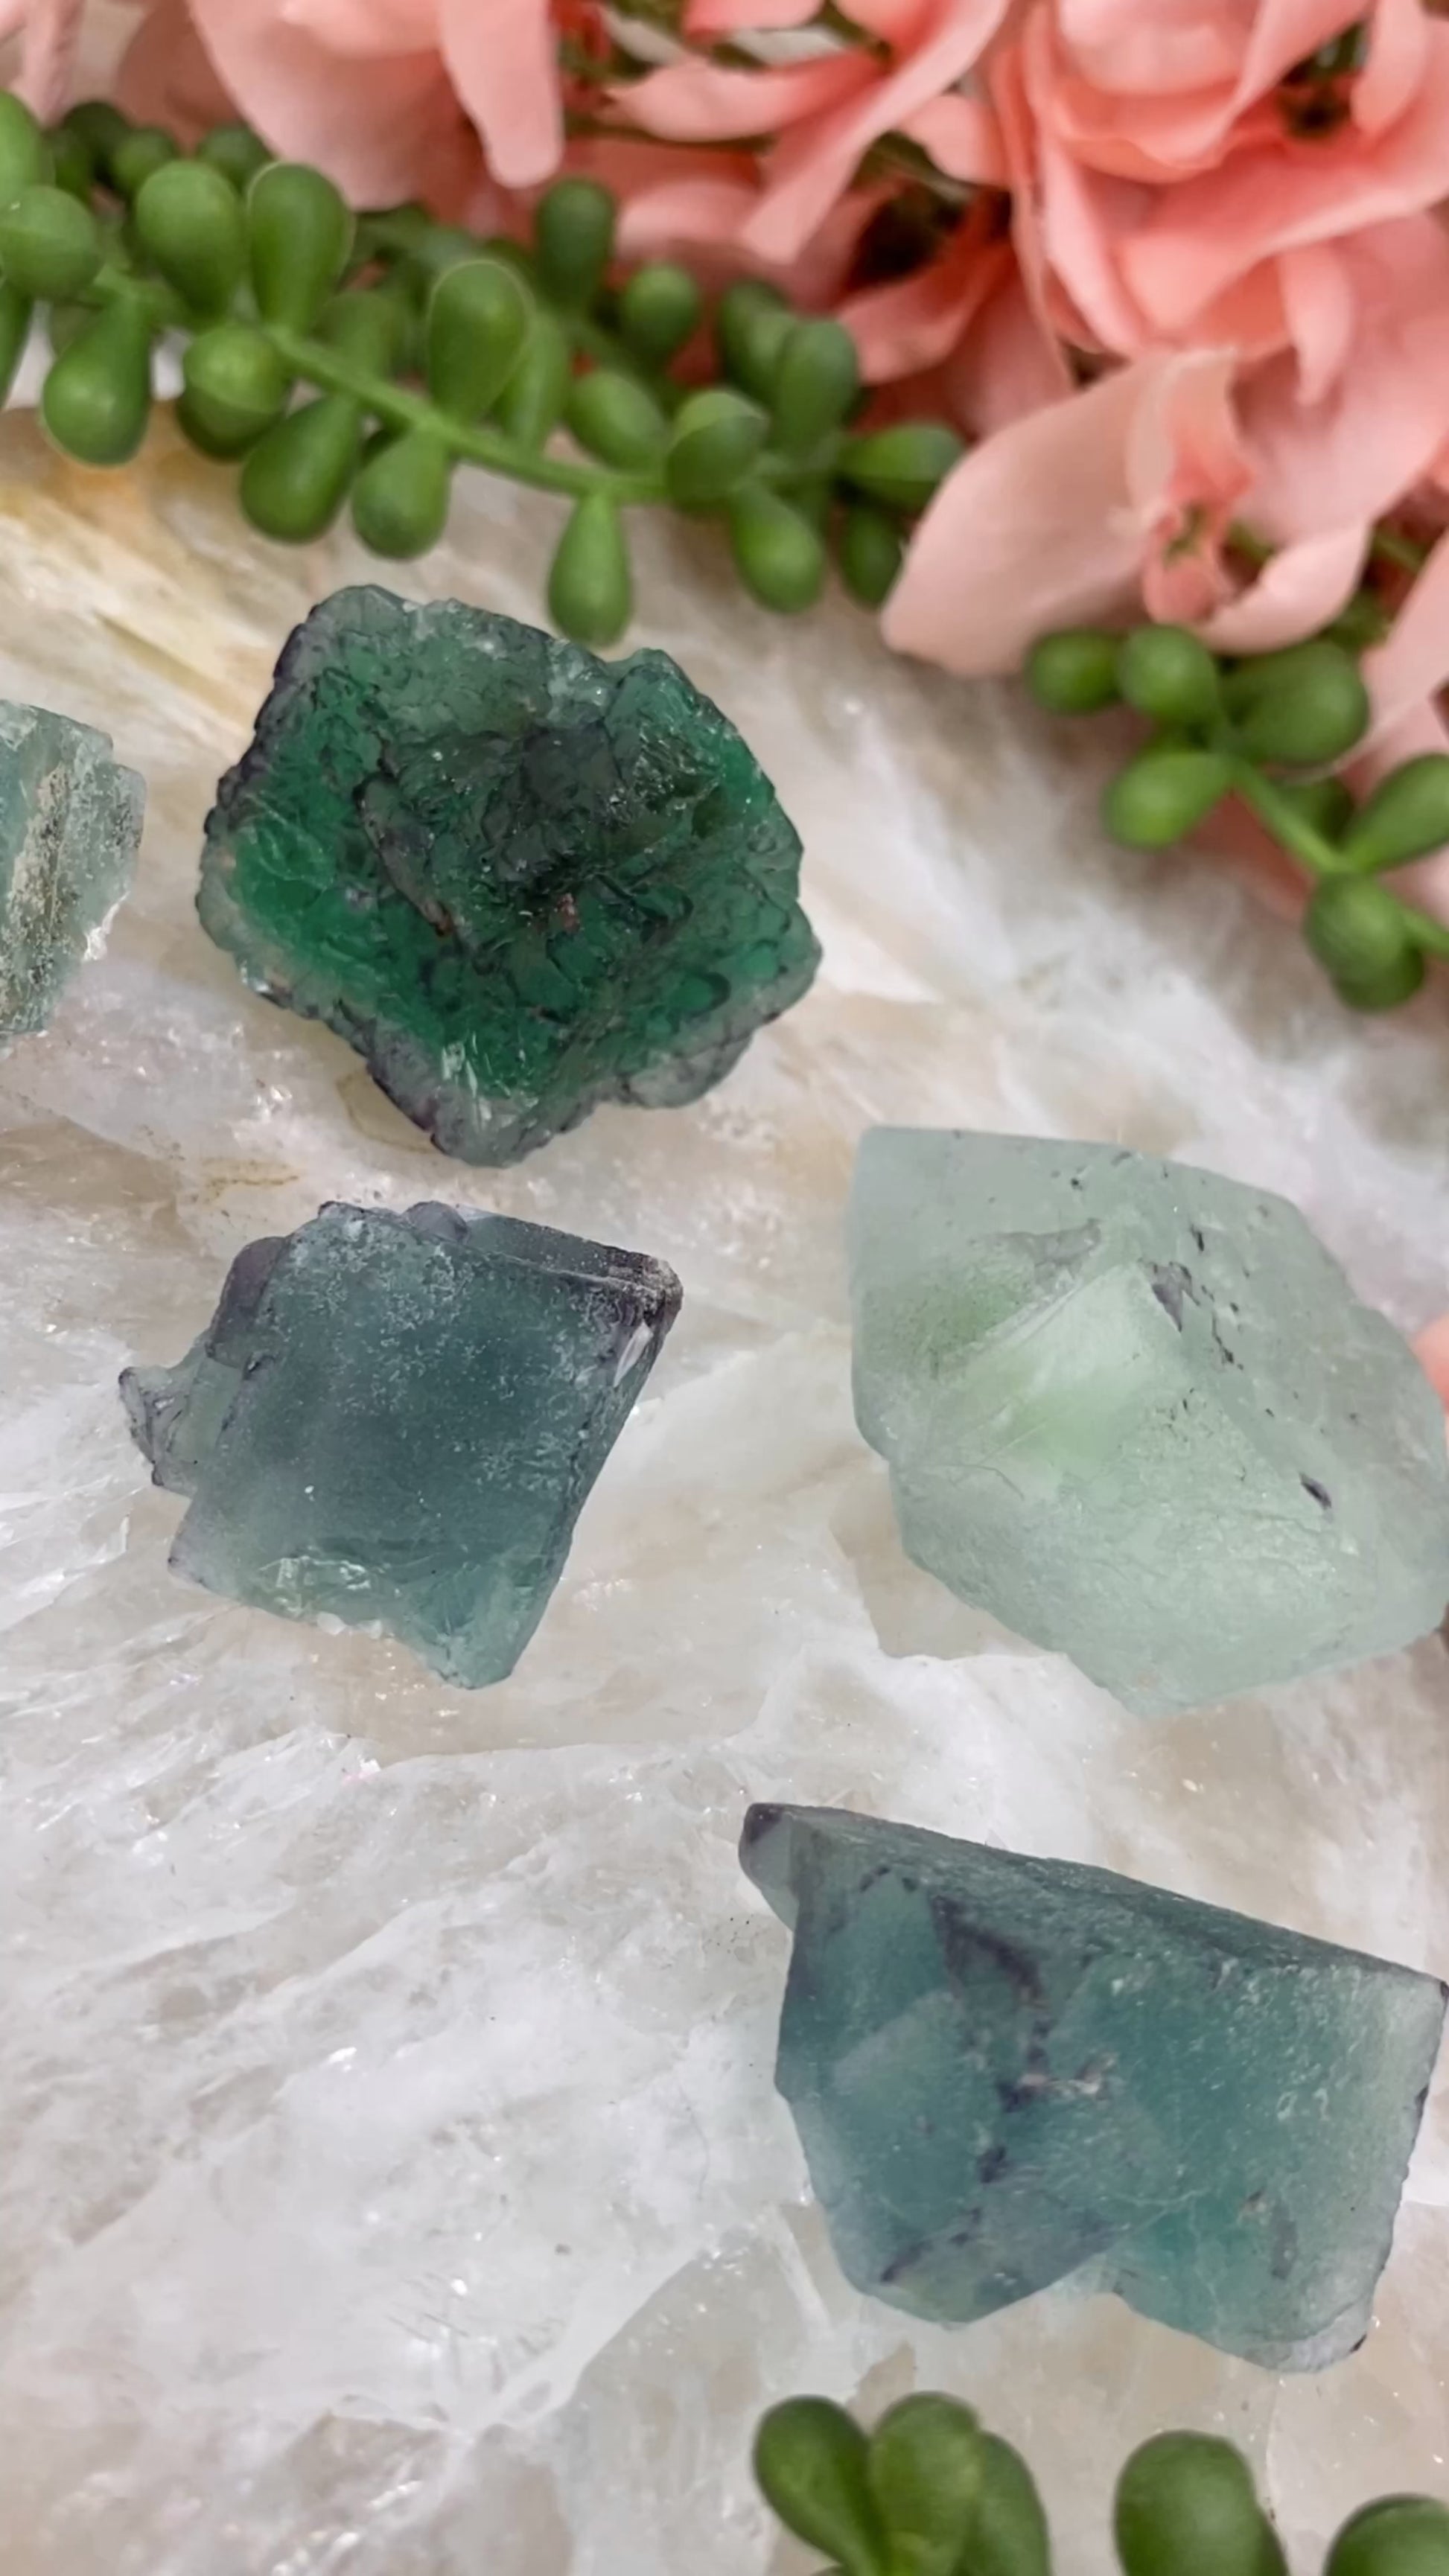 Green-Blue-Namibian-Fluorite-Crystals